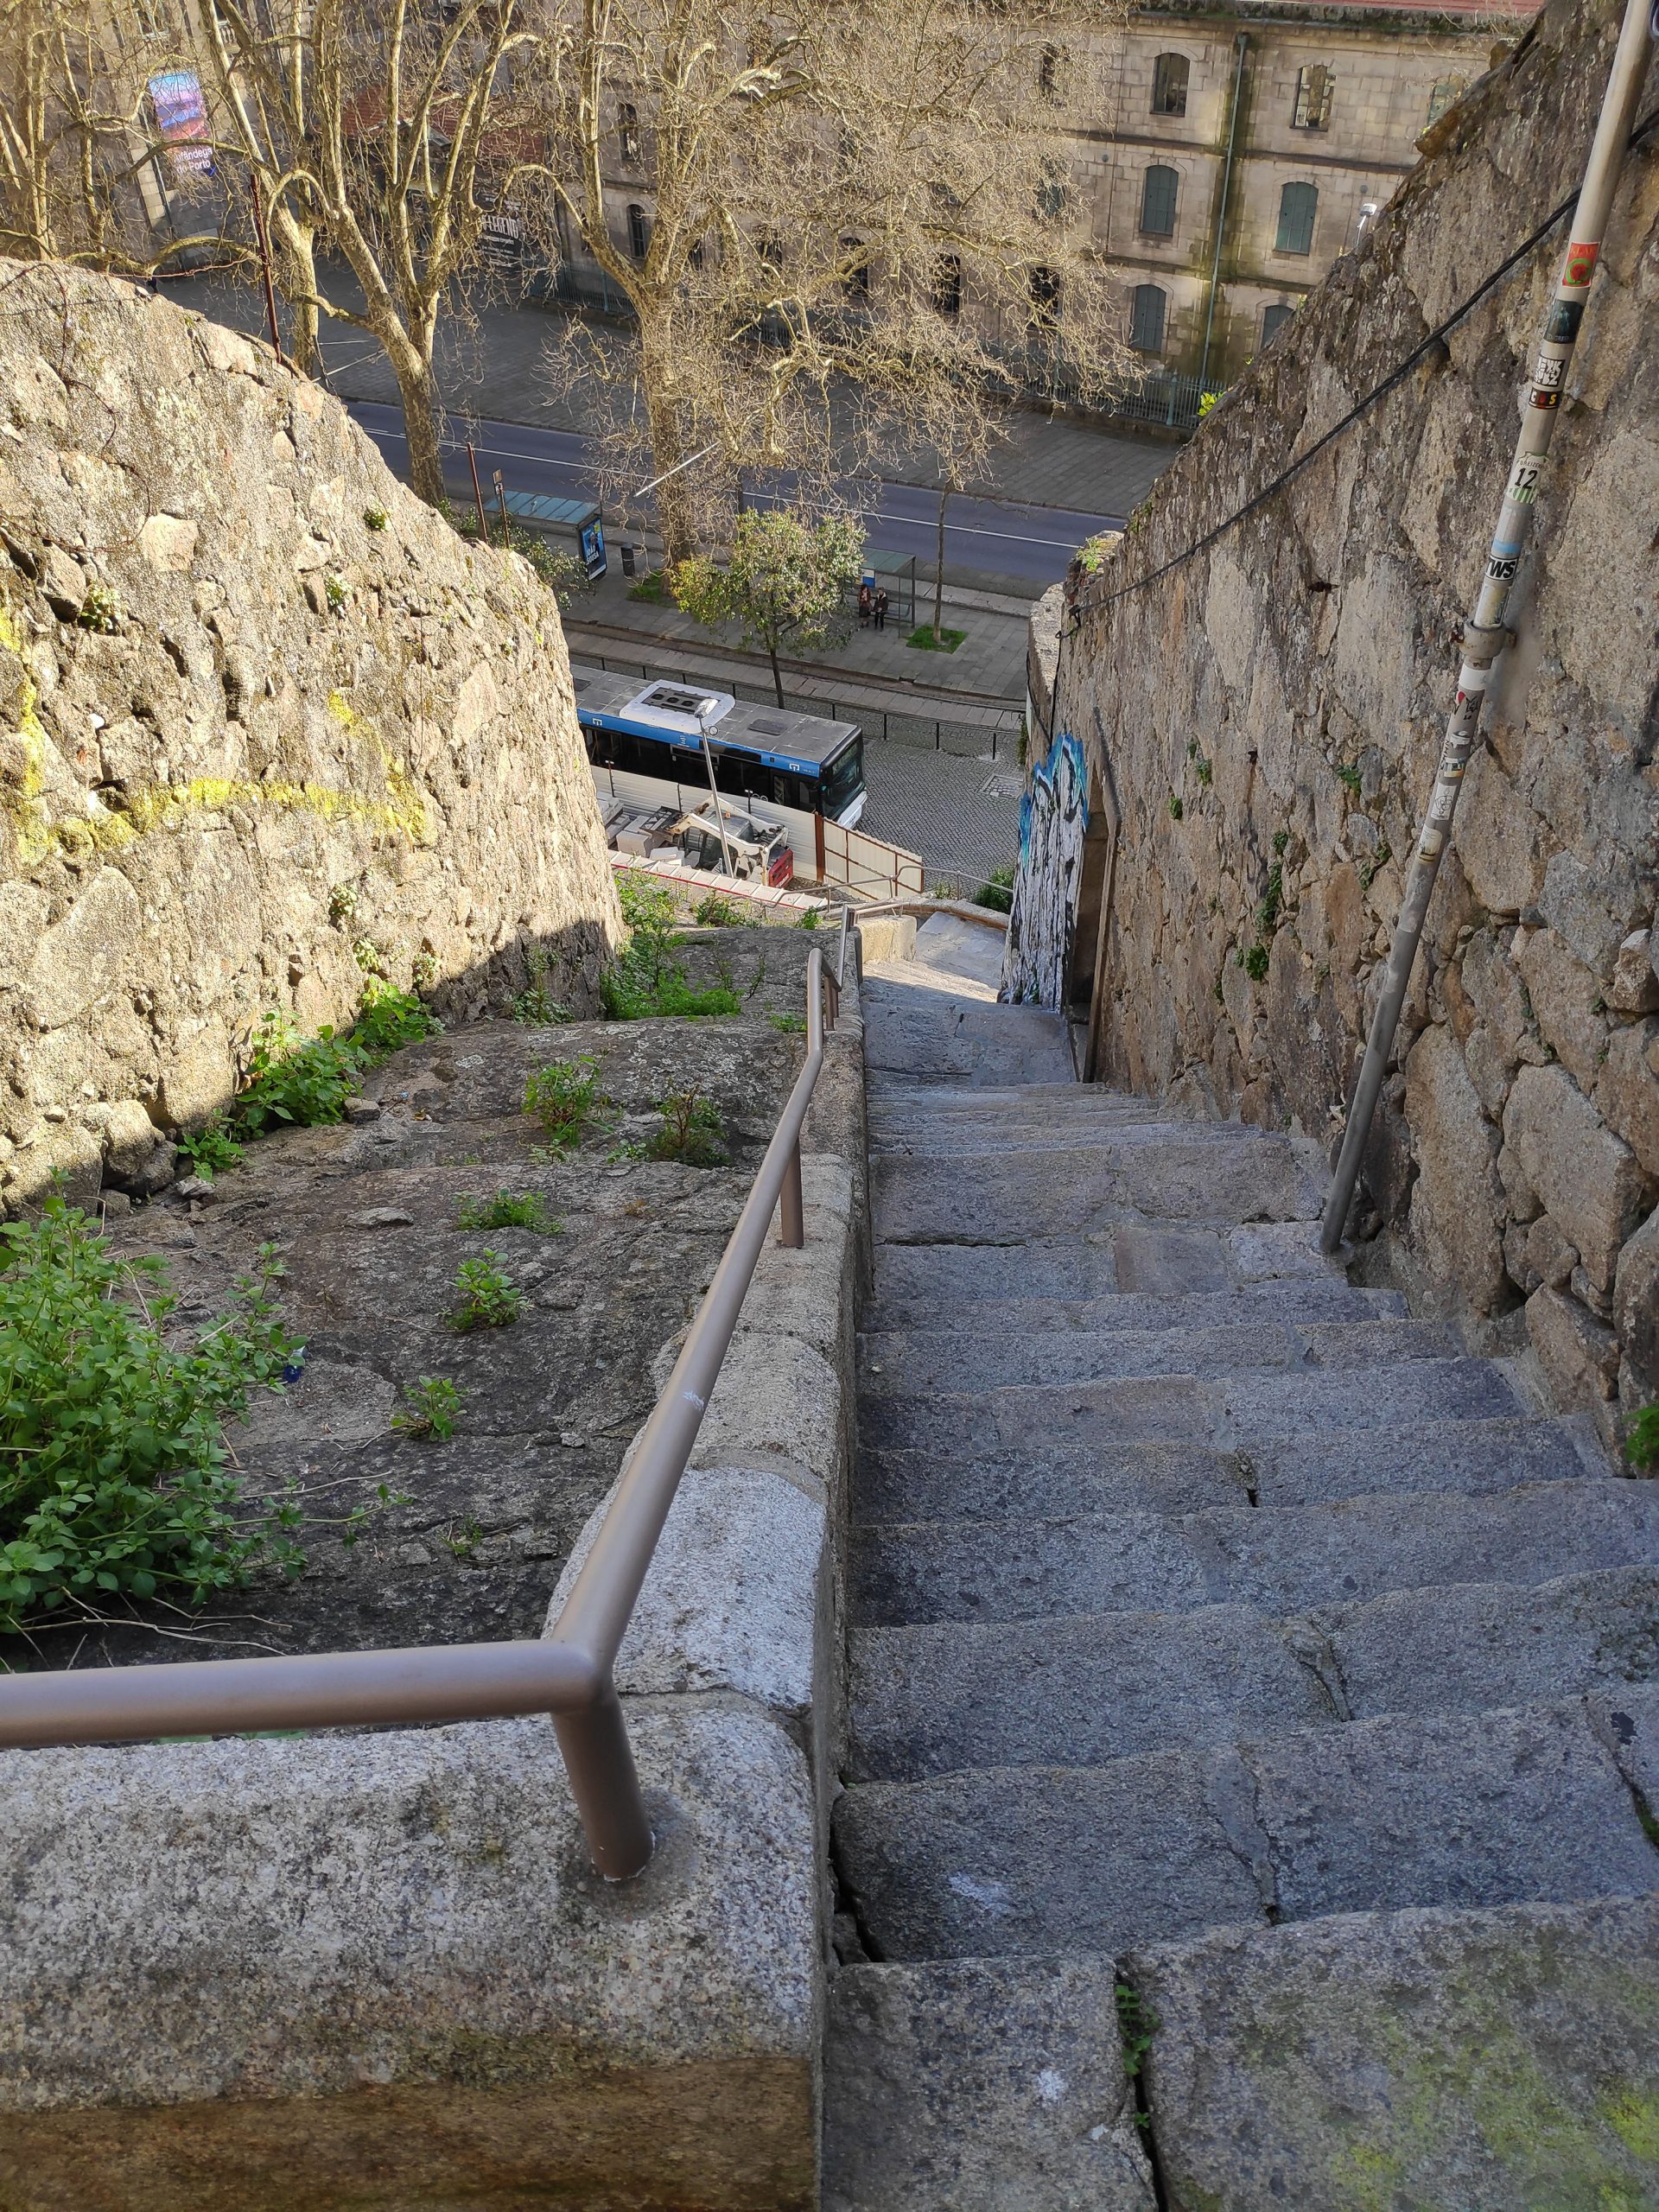 Some steep steps.